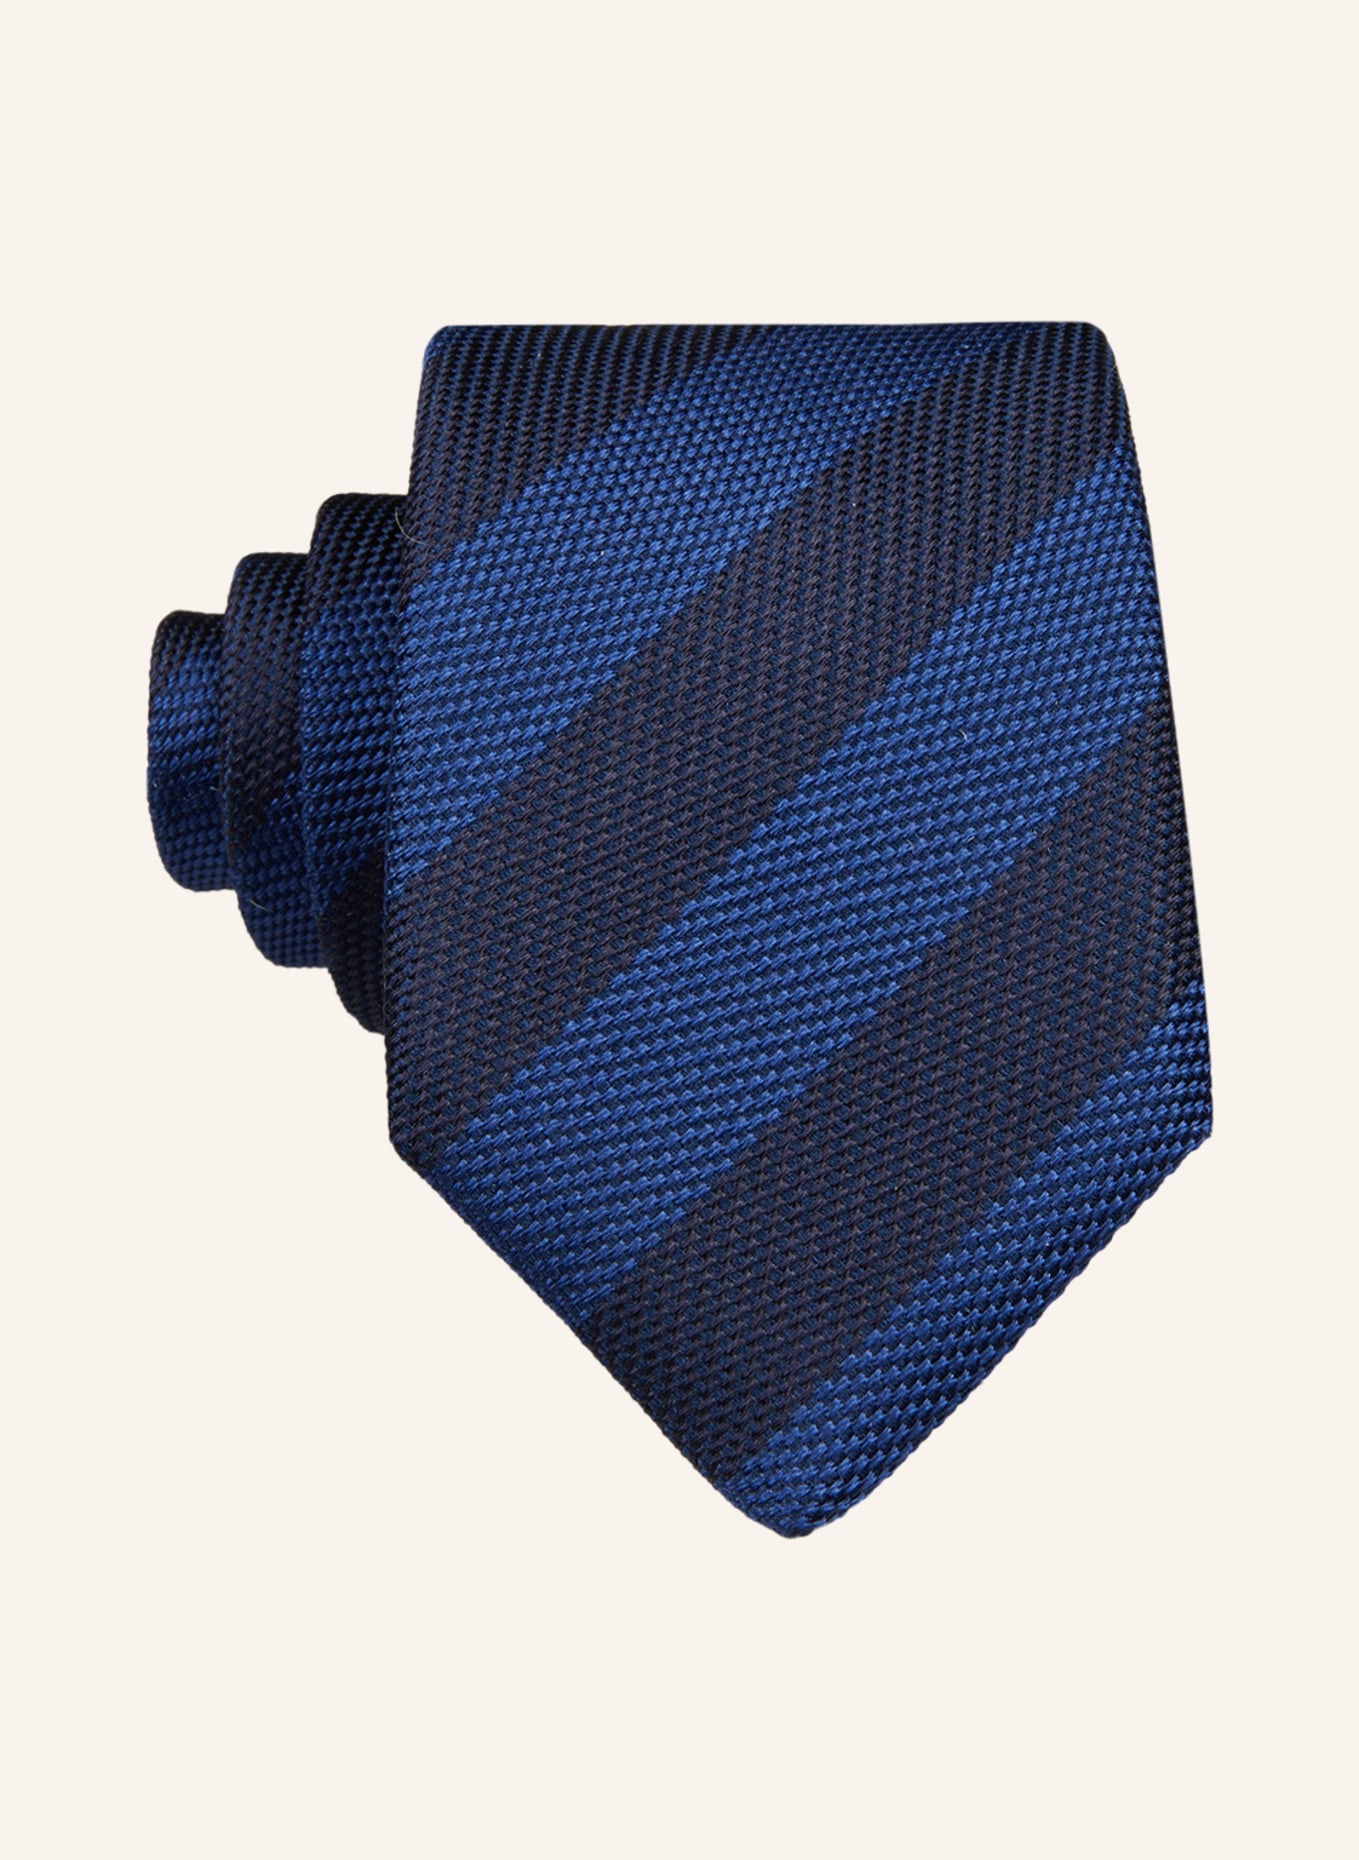 TOMMY HILFIGER Krawatte, Farbe: DUNKELBLAU/ BLAU (Bild 1)